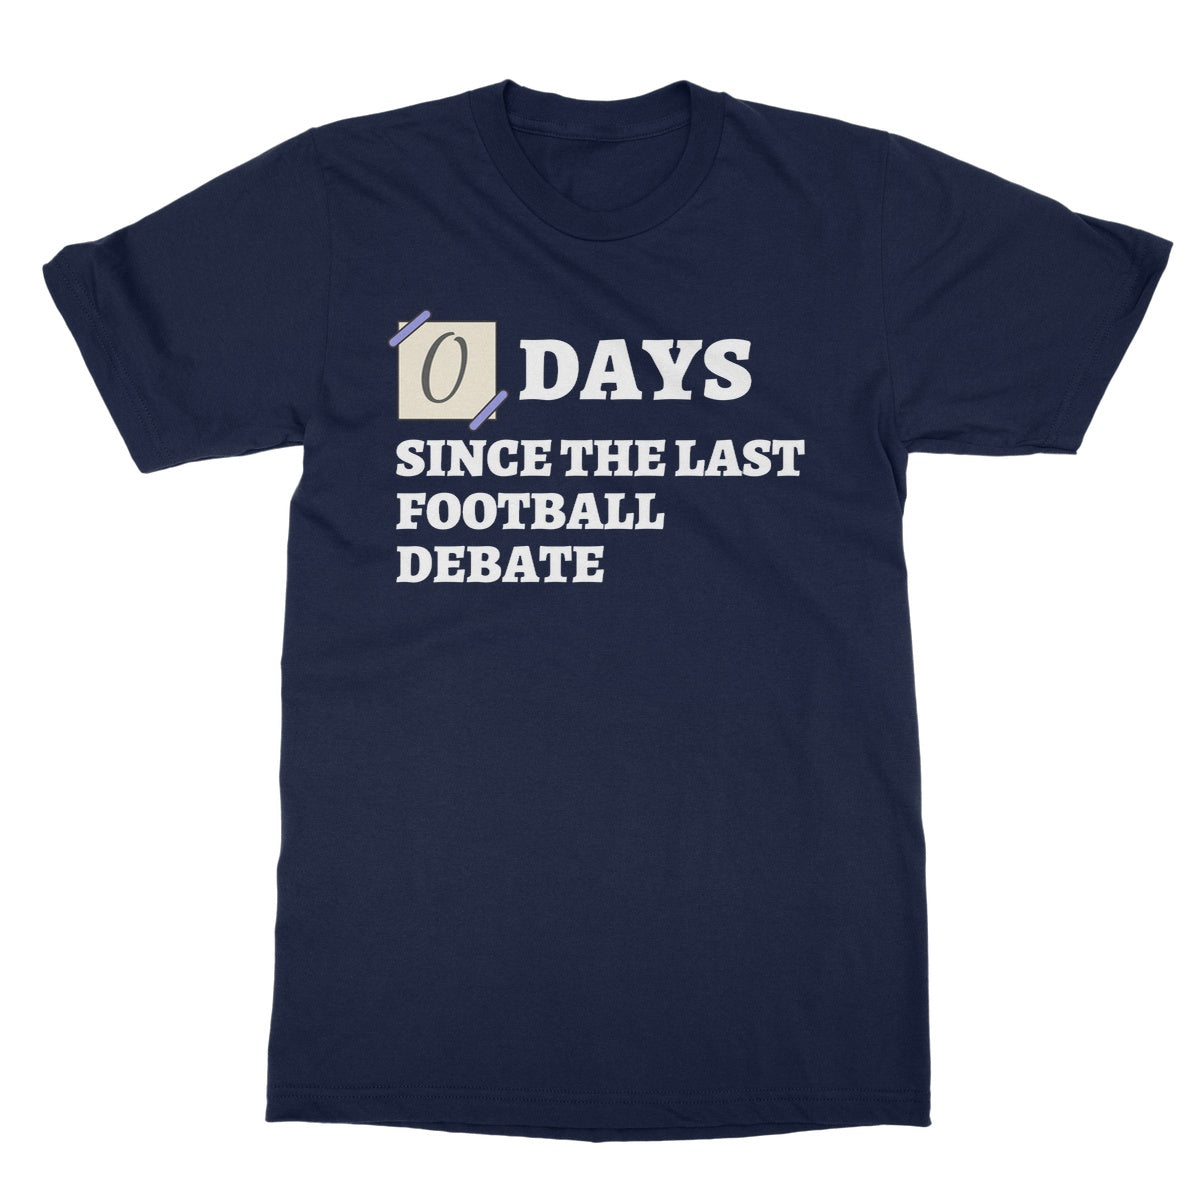 0 days since the last football debate t shirt navy